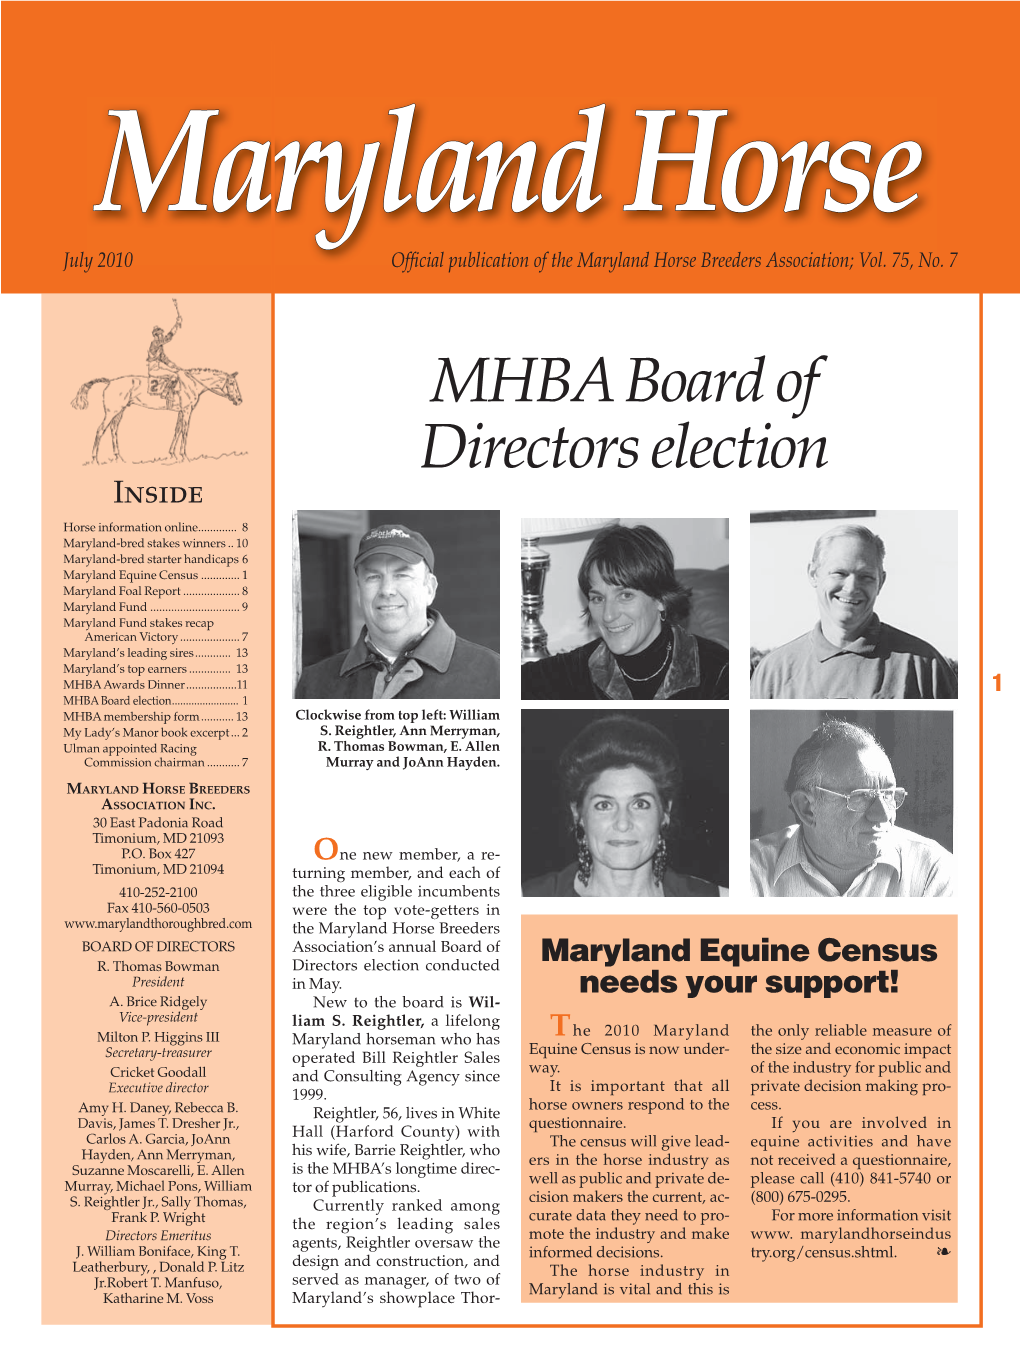 Maryland Horse Breeders Association Inc